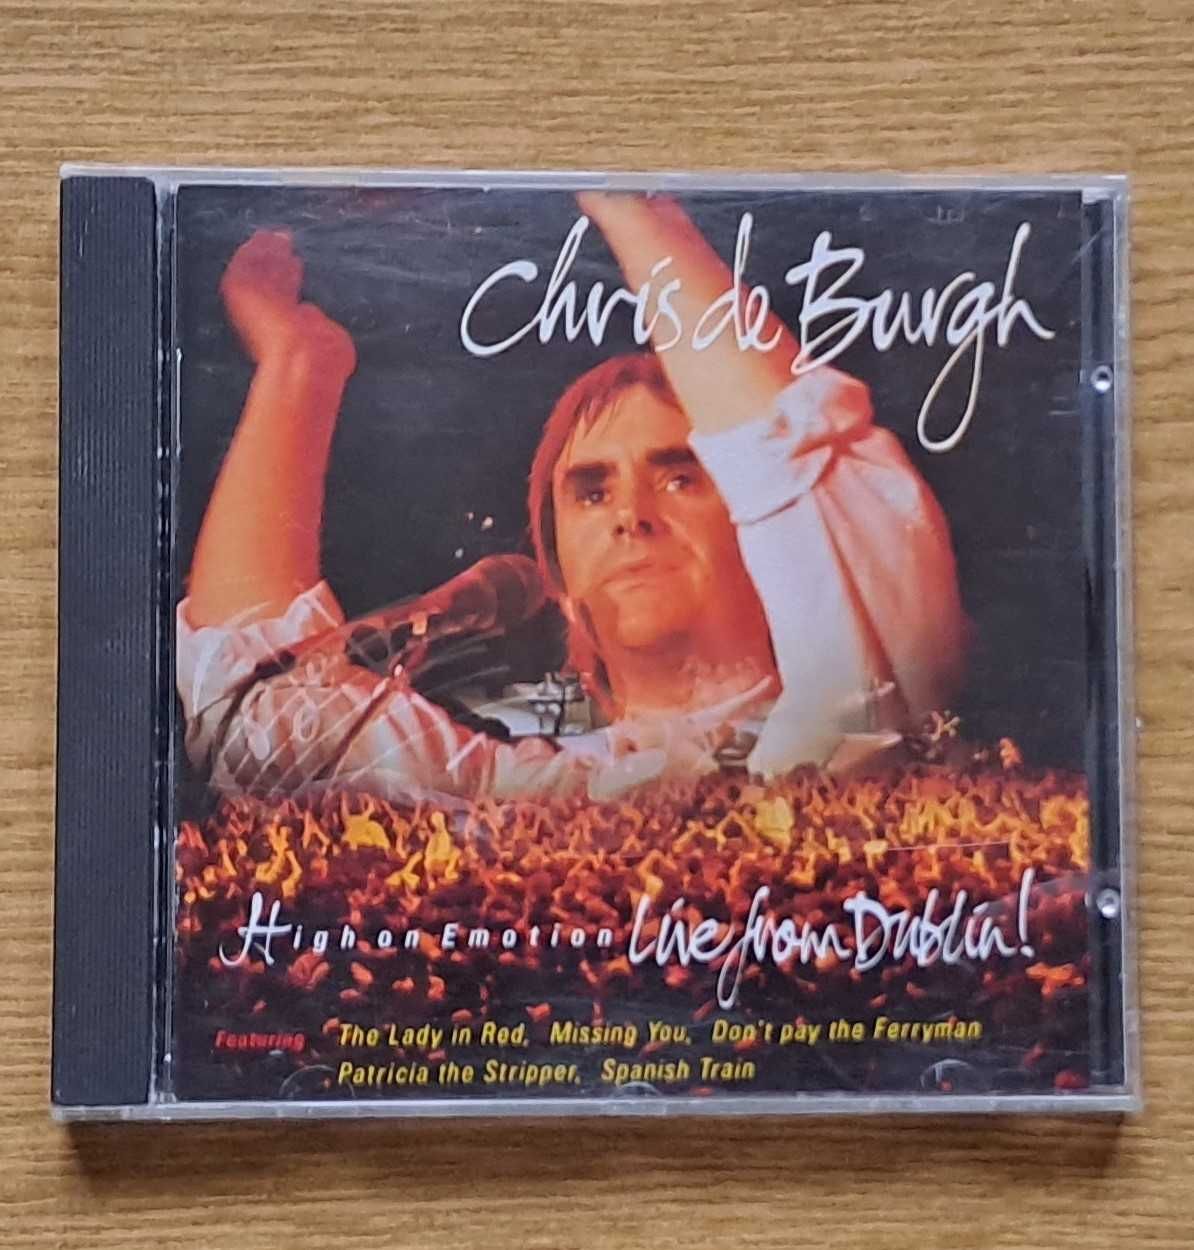 Chris de Burgh - High On Emotion - Live From Dublin  CD